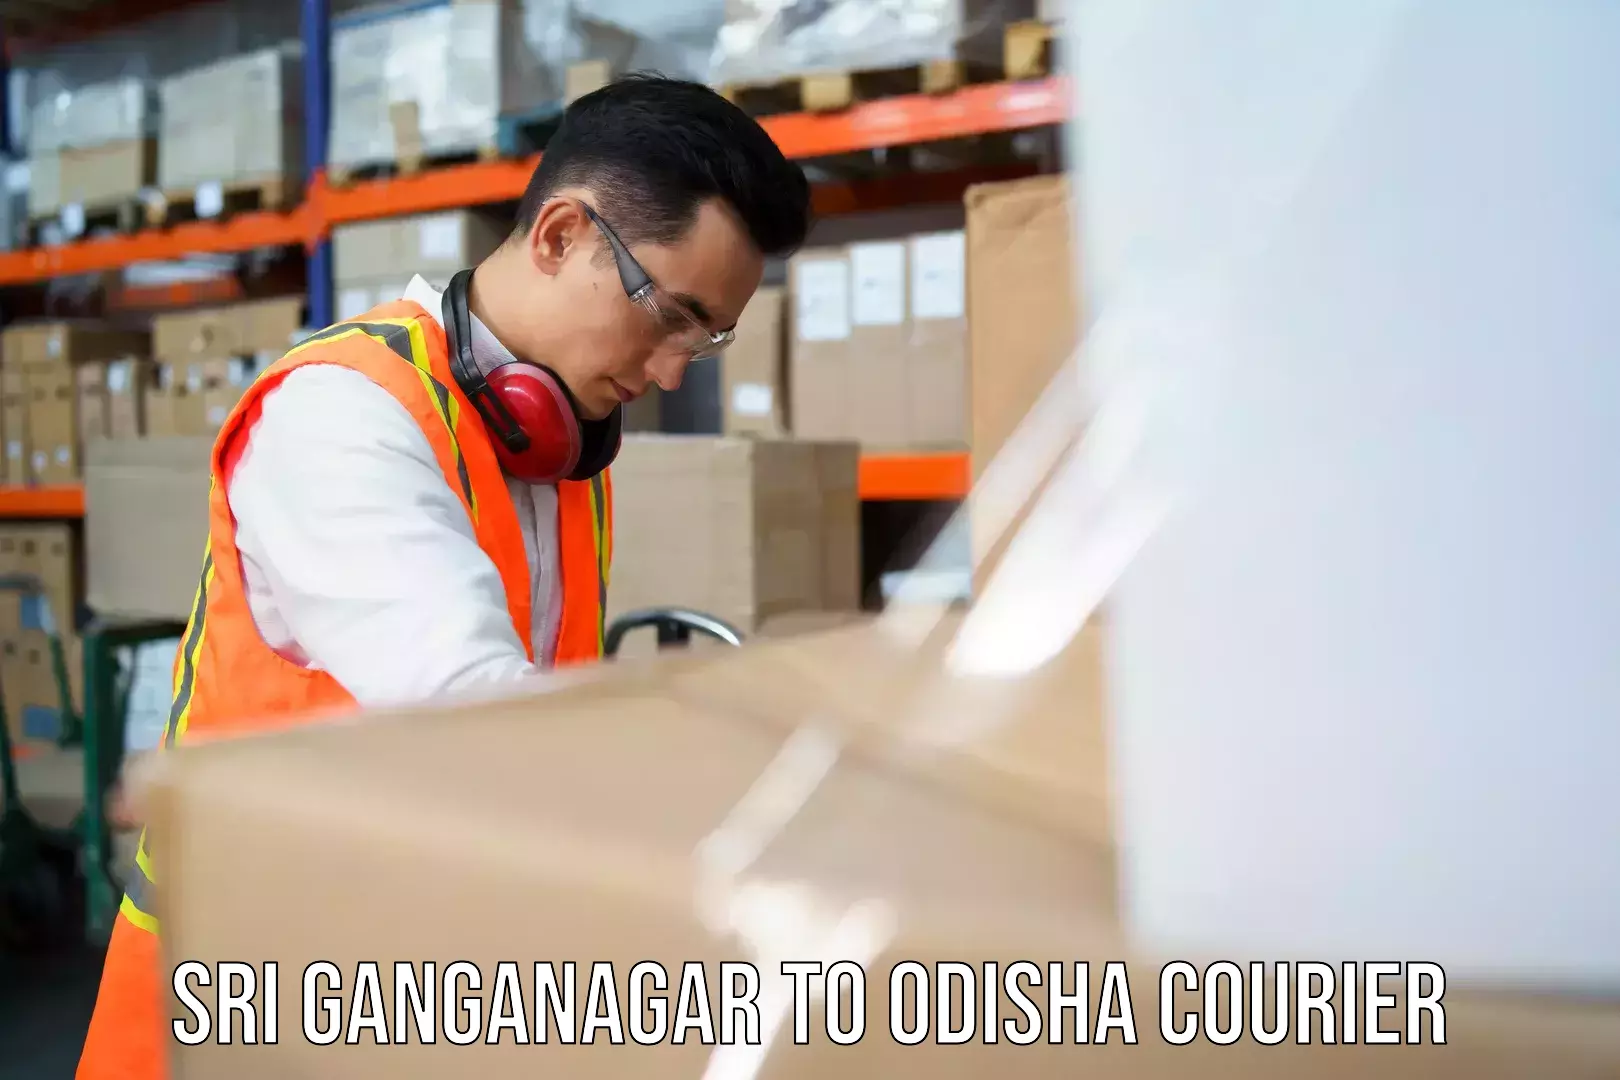 Courier service efficiency Sri Ganganagar to Bhuban